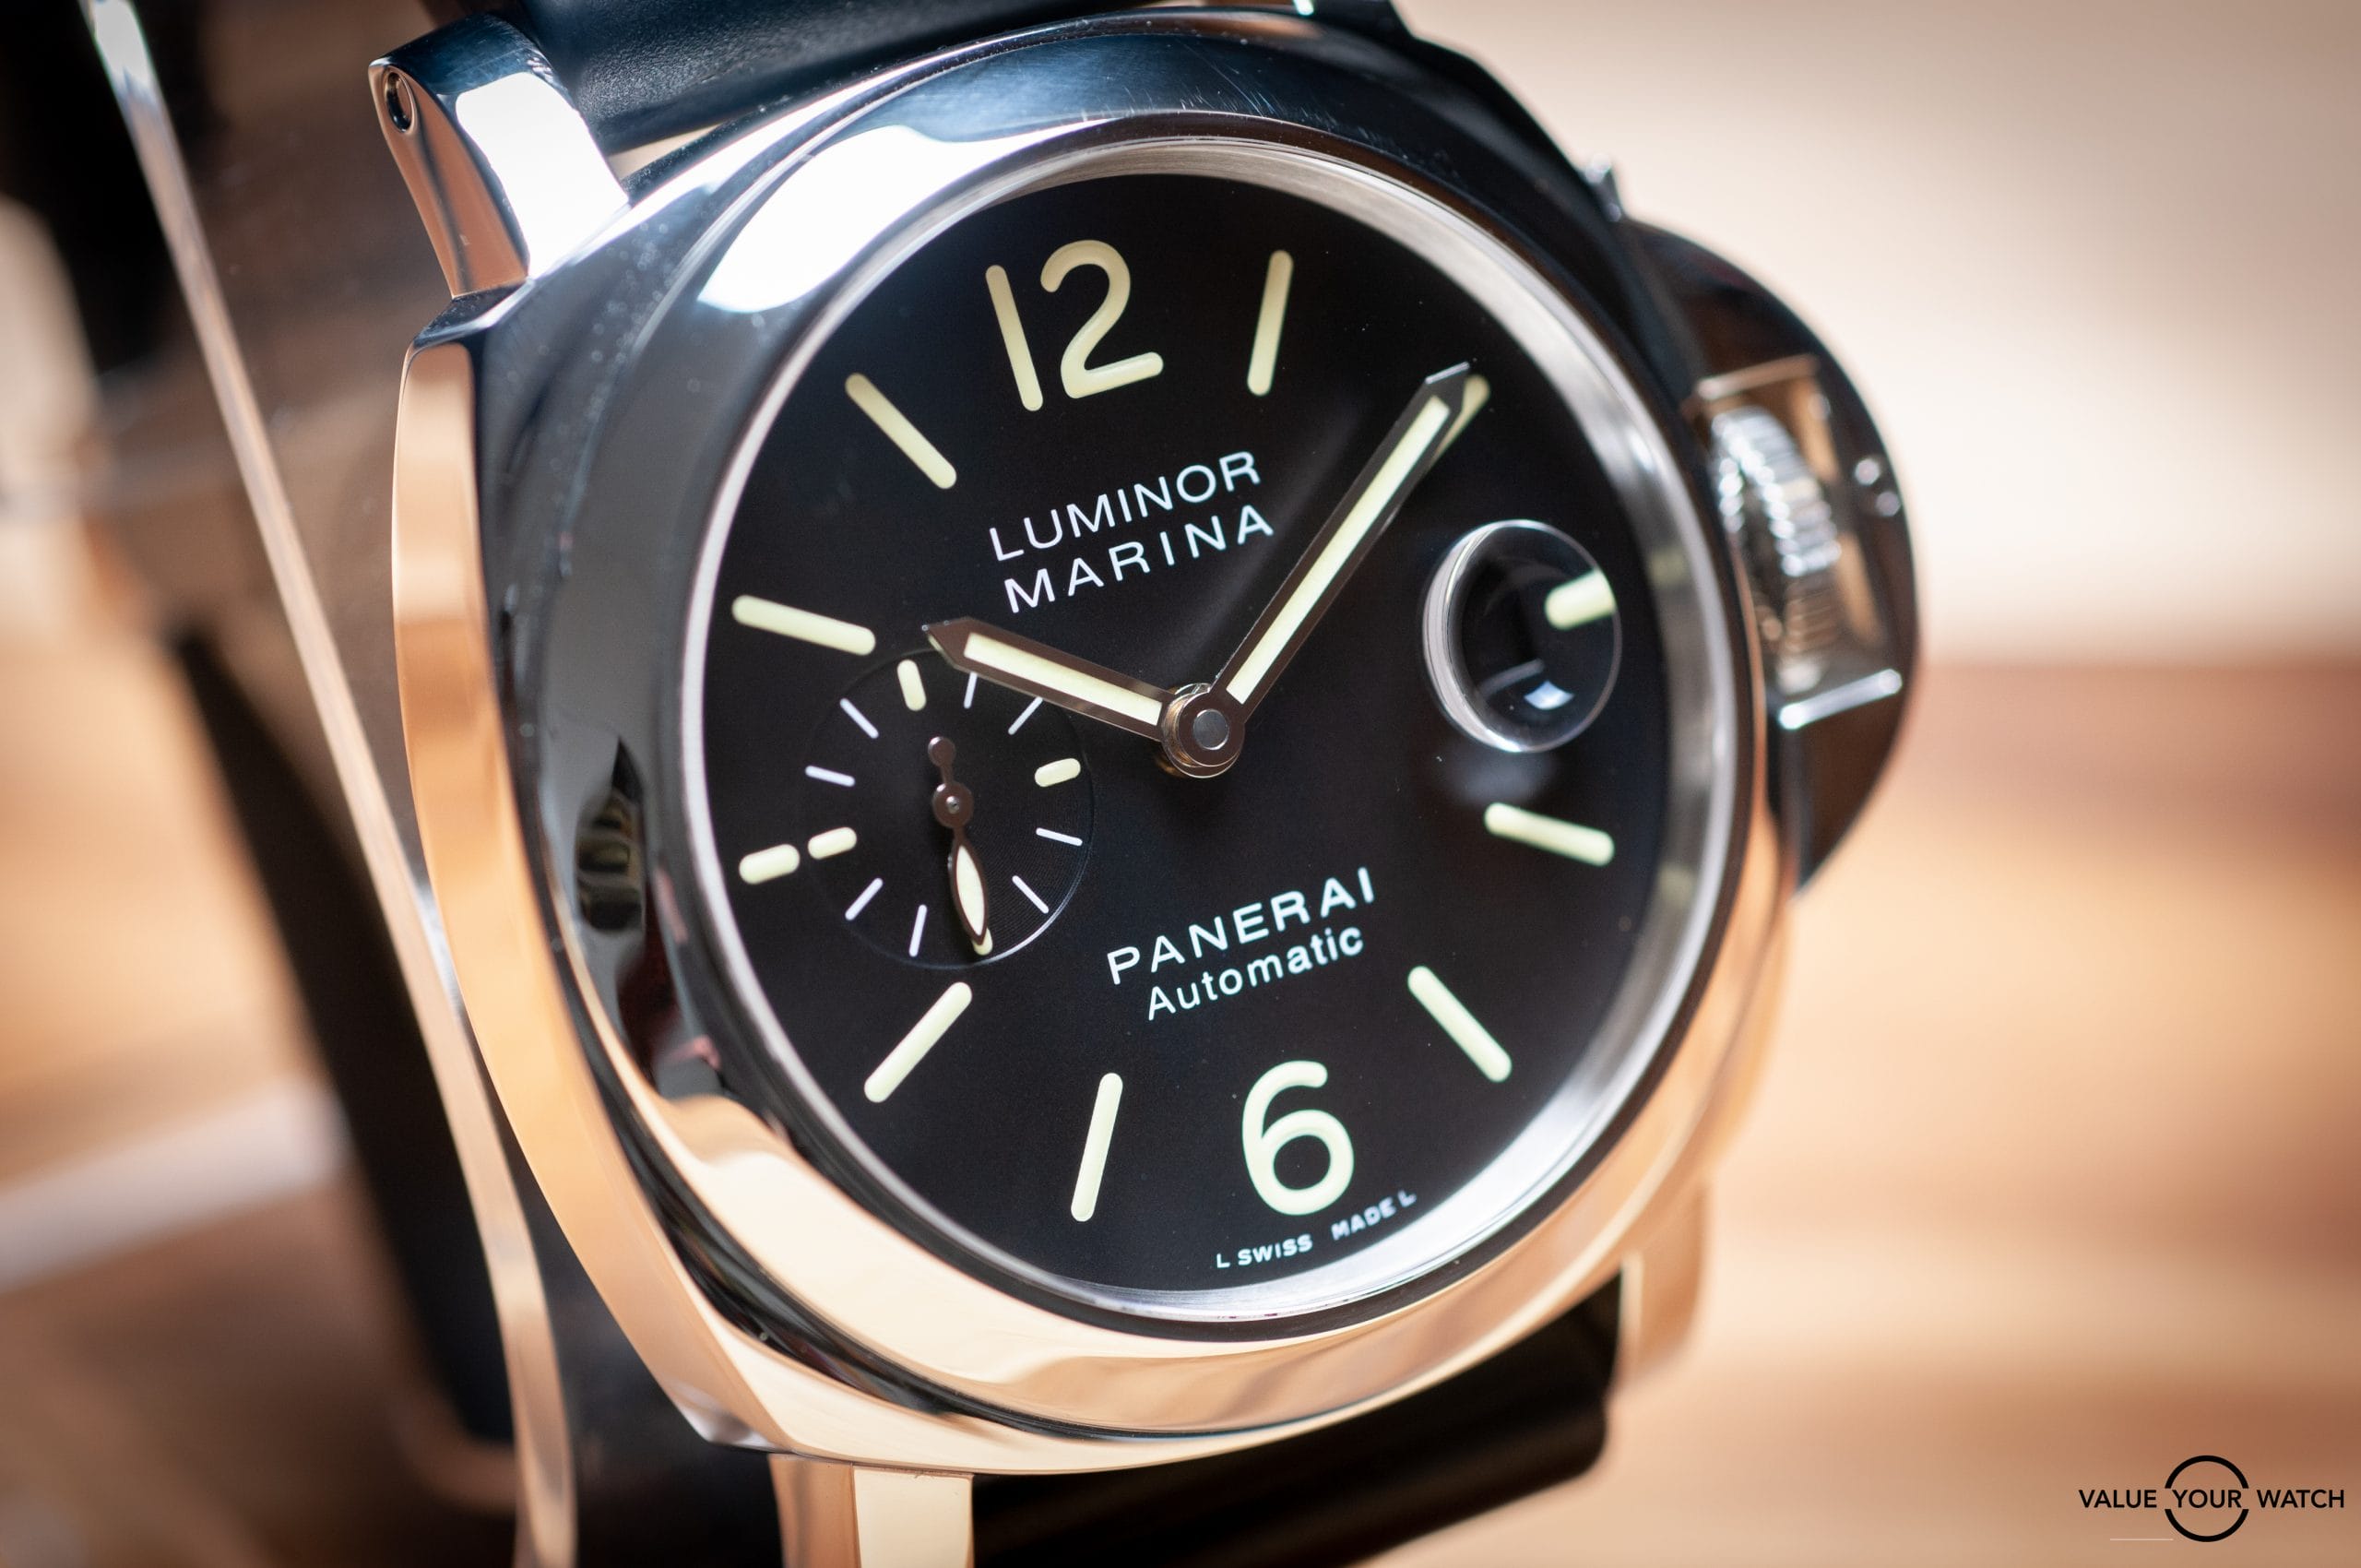 Panerai Luminor Marina 1950 PAM00104 : Value Your Watch